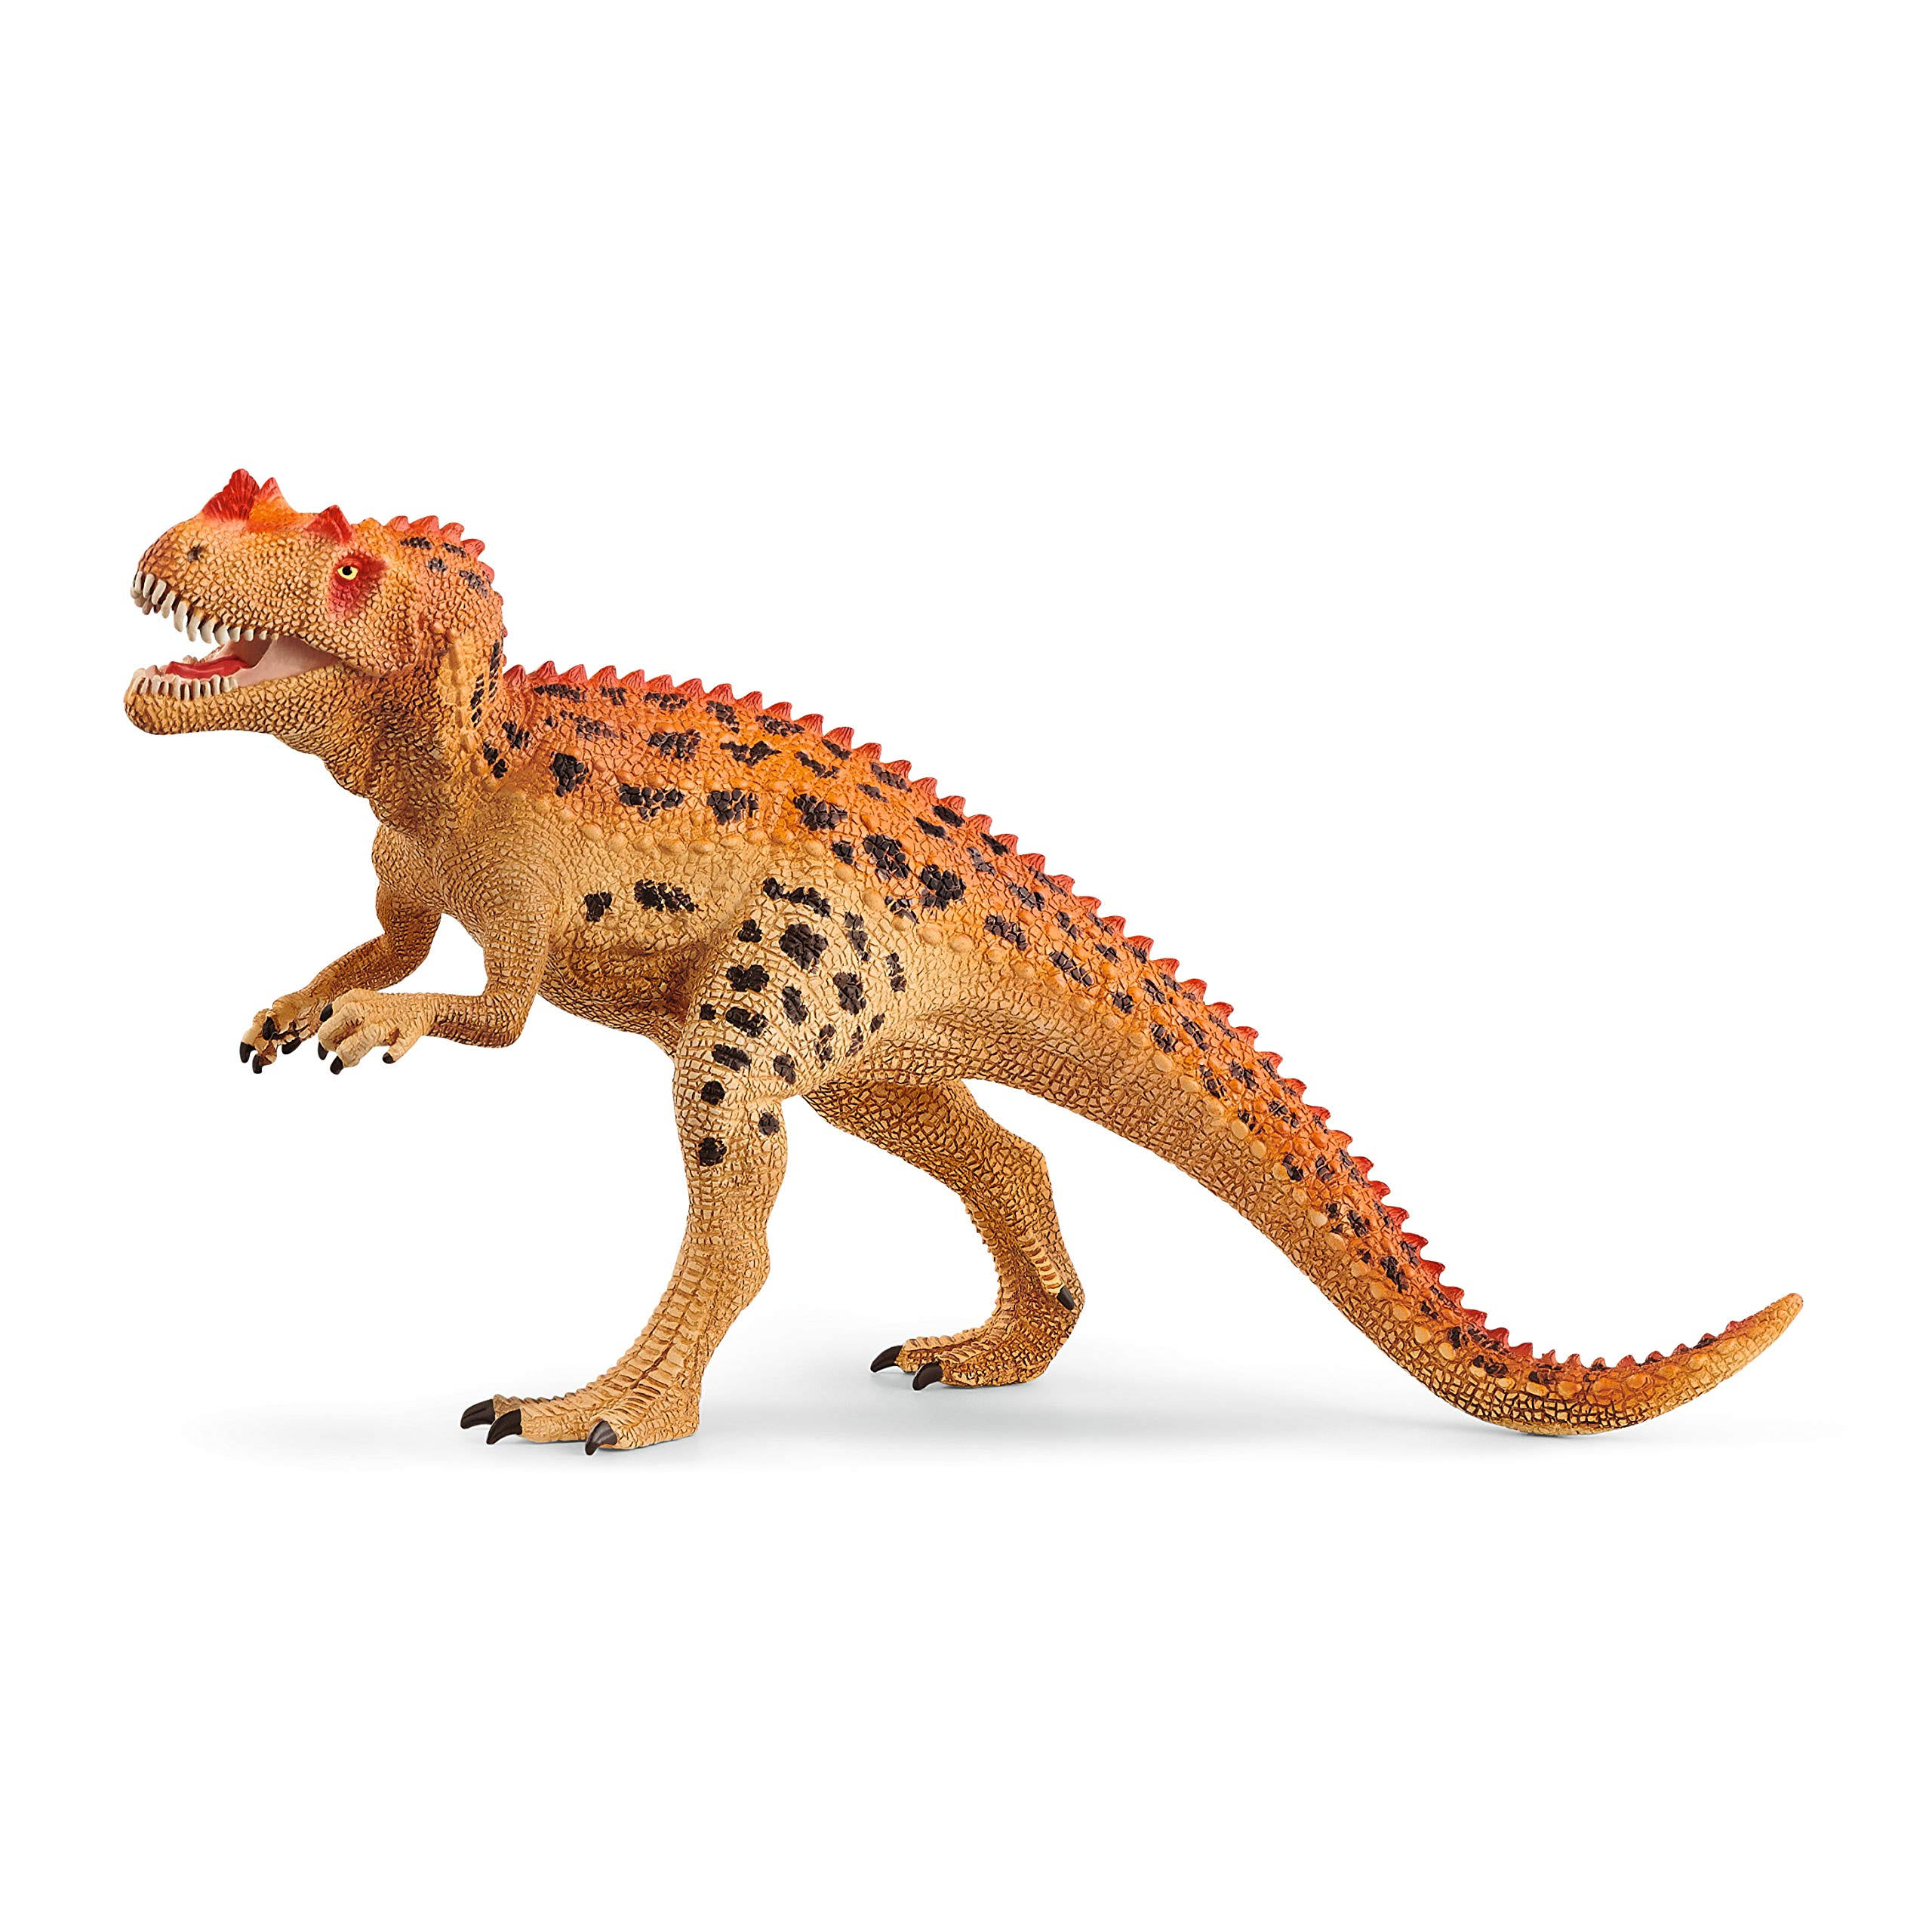 Schleich Dinosaurs Dimorphodon 15012 Toy Figure for sale online 